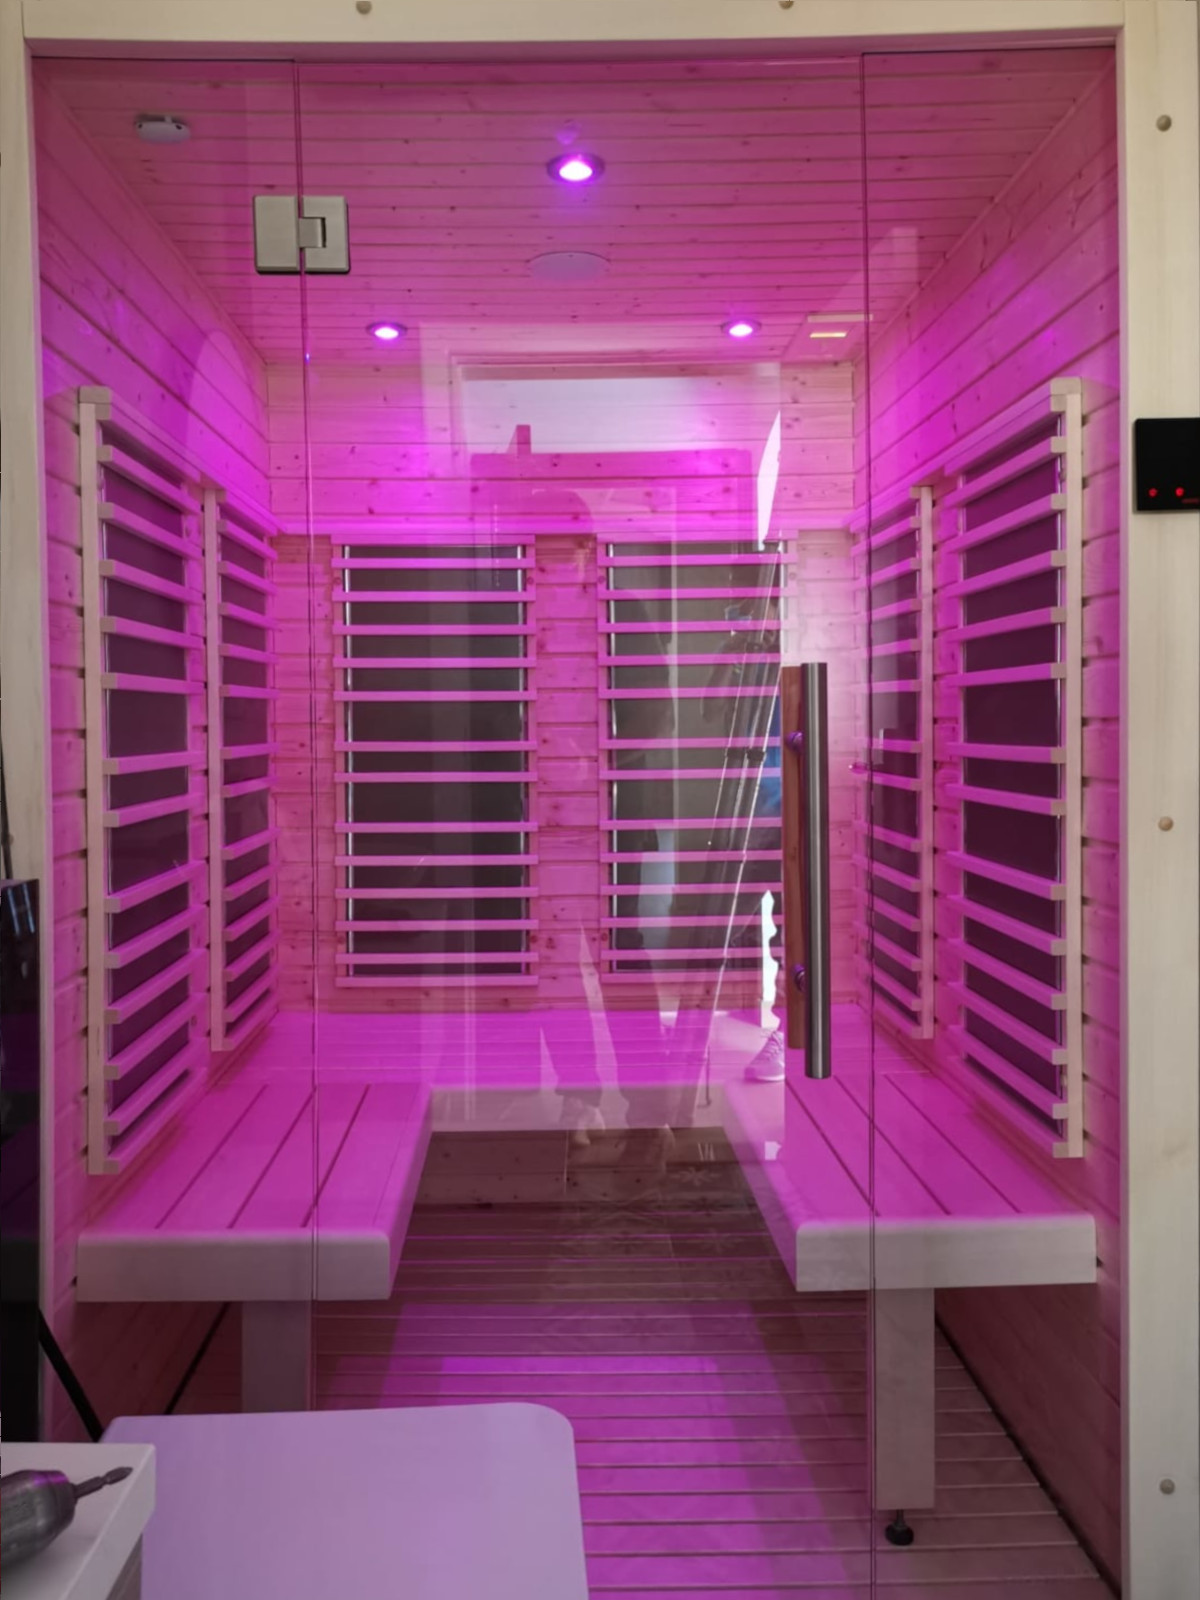 sauna ad infrarossi per bagno